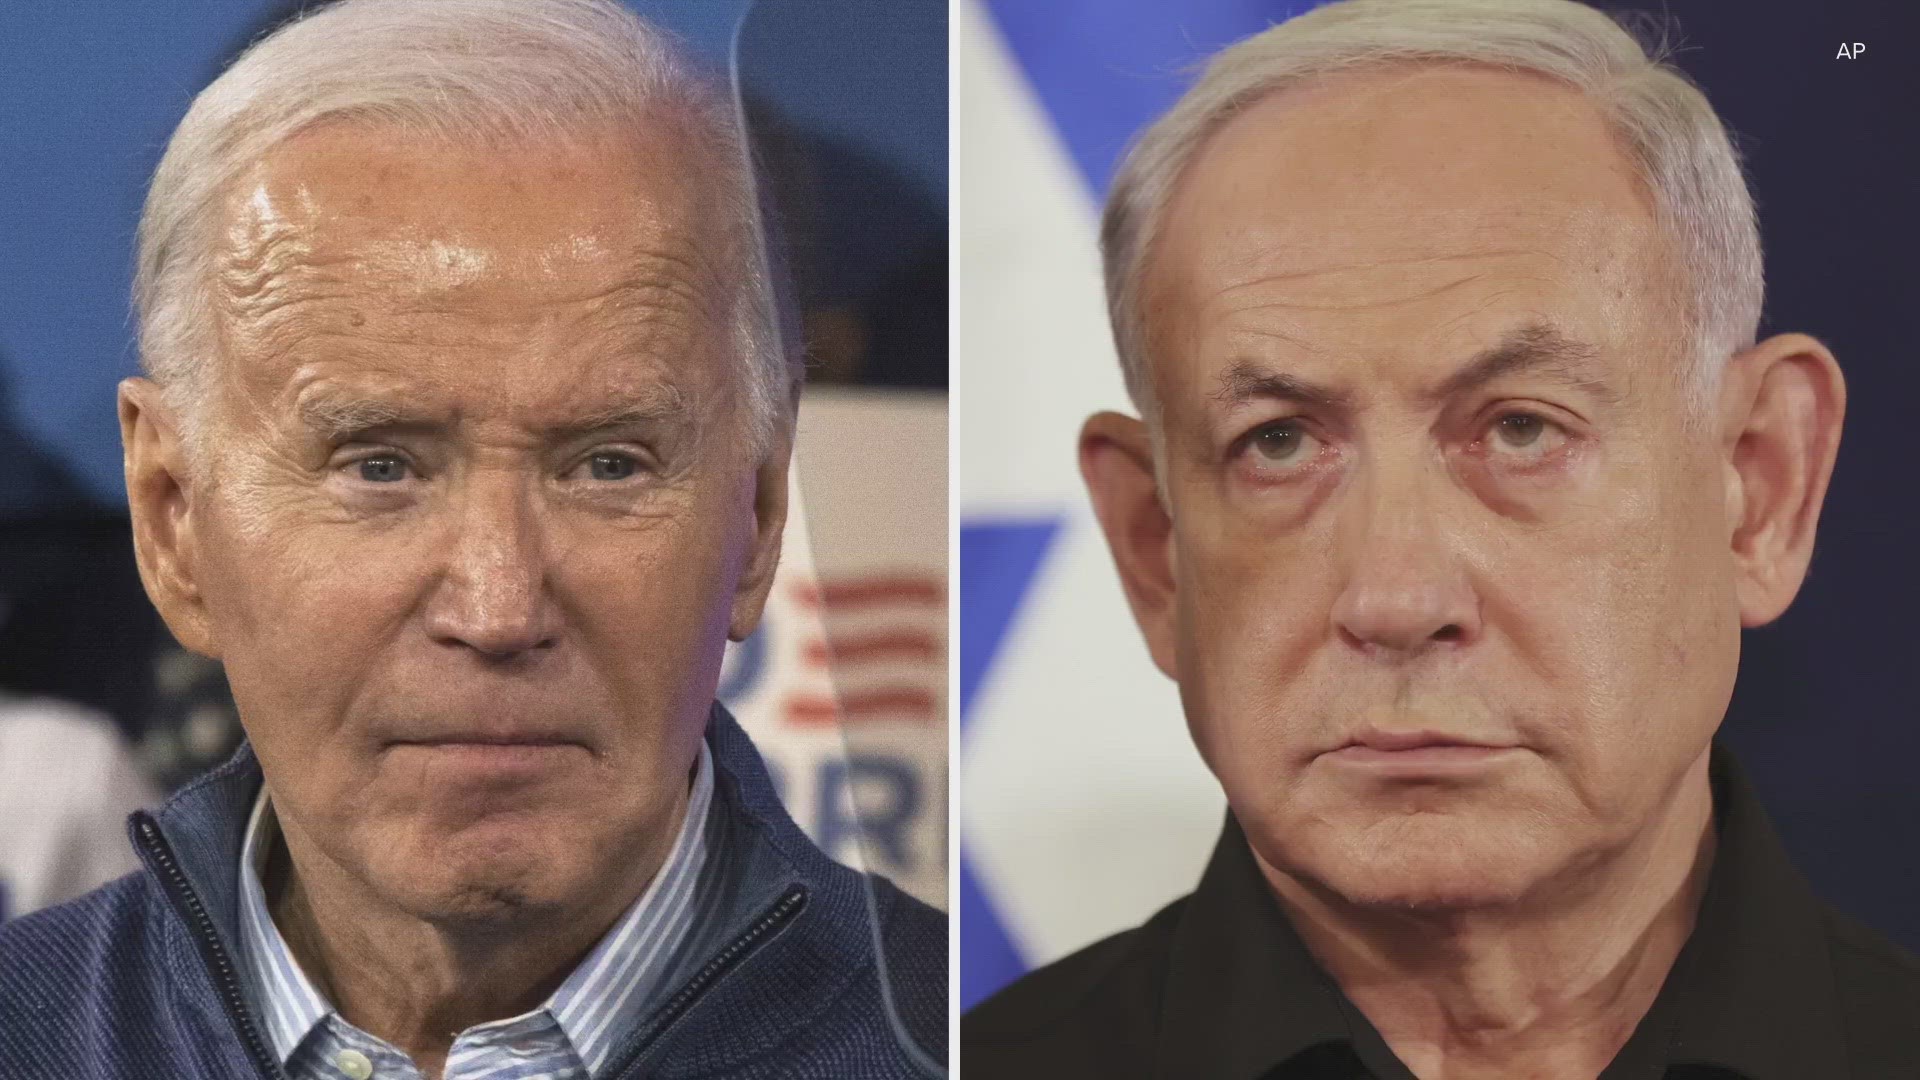 President Joe Biden is expected to meet with Israel's Prime Minister Benjamin Netanyahu on Thursday.